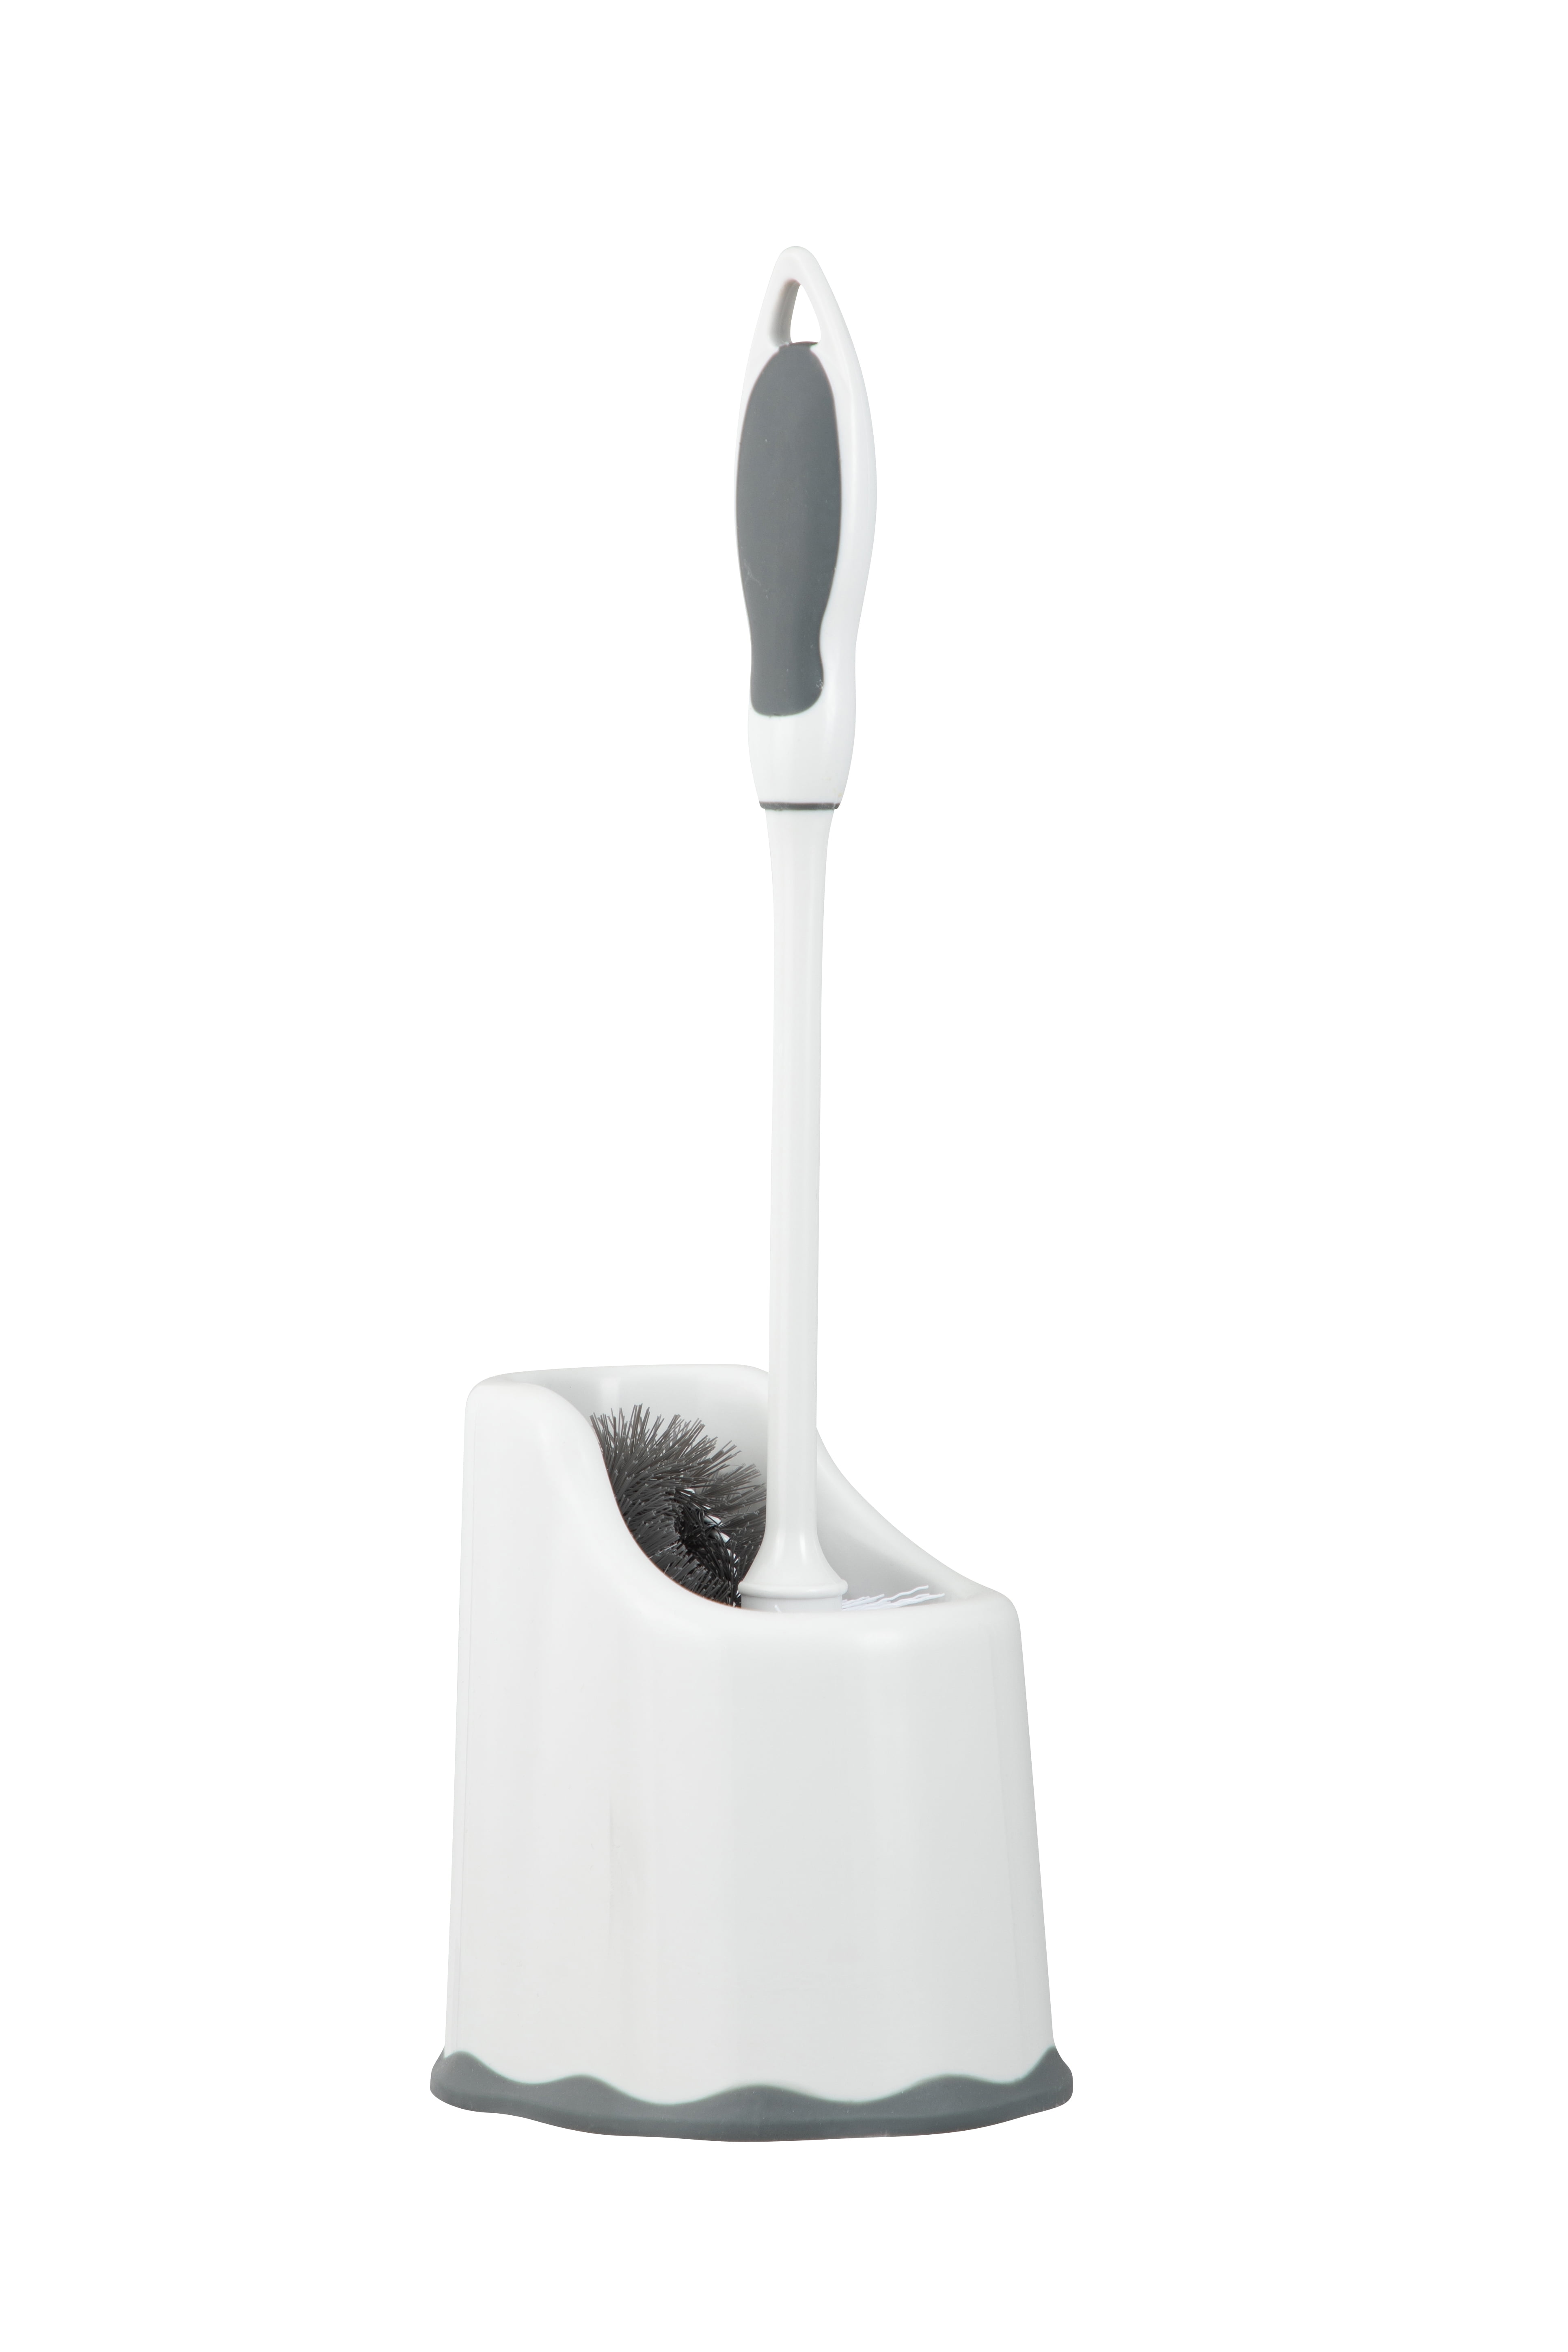 Ctcwsh Toilet Bowl Brush and Holder for Bathroom - Under-Rim Brush Head -  Long Handle Household Cleaning Brushes Set (White x 2)